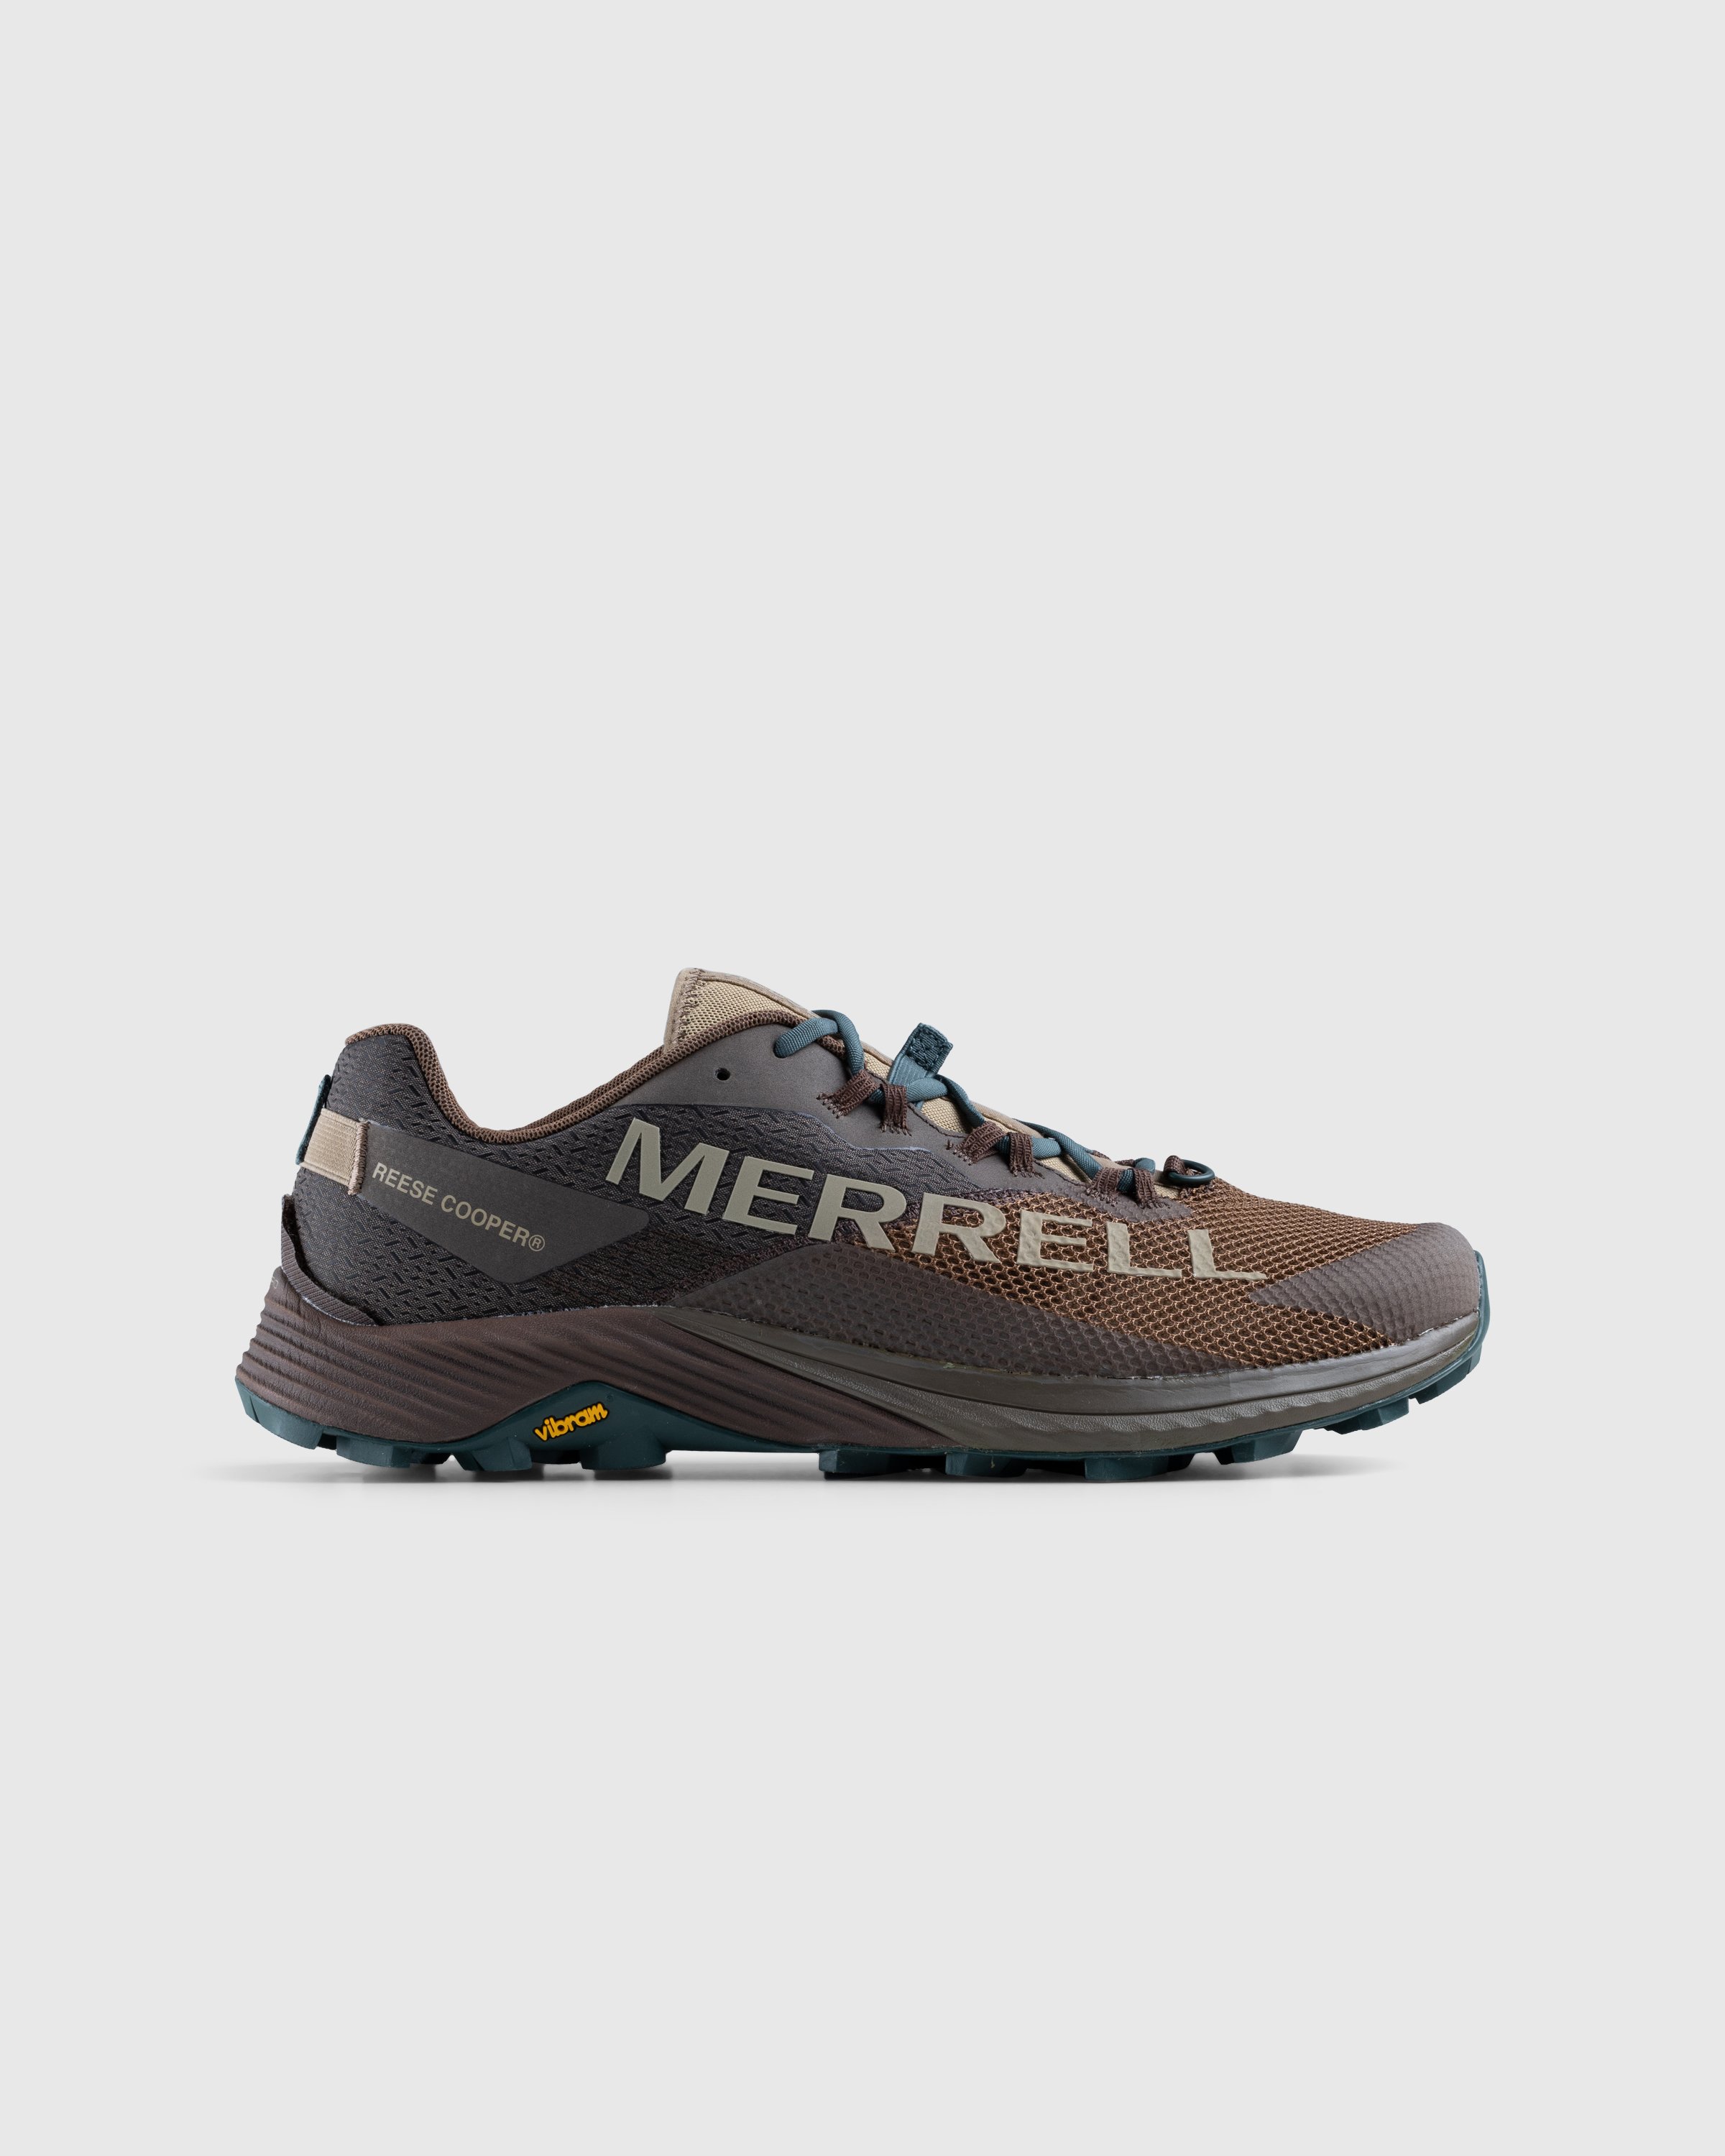 Merrell x Reese Cooper - MTL Long Sky 2 Otter Brown - Footwear - Brown - Image 1